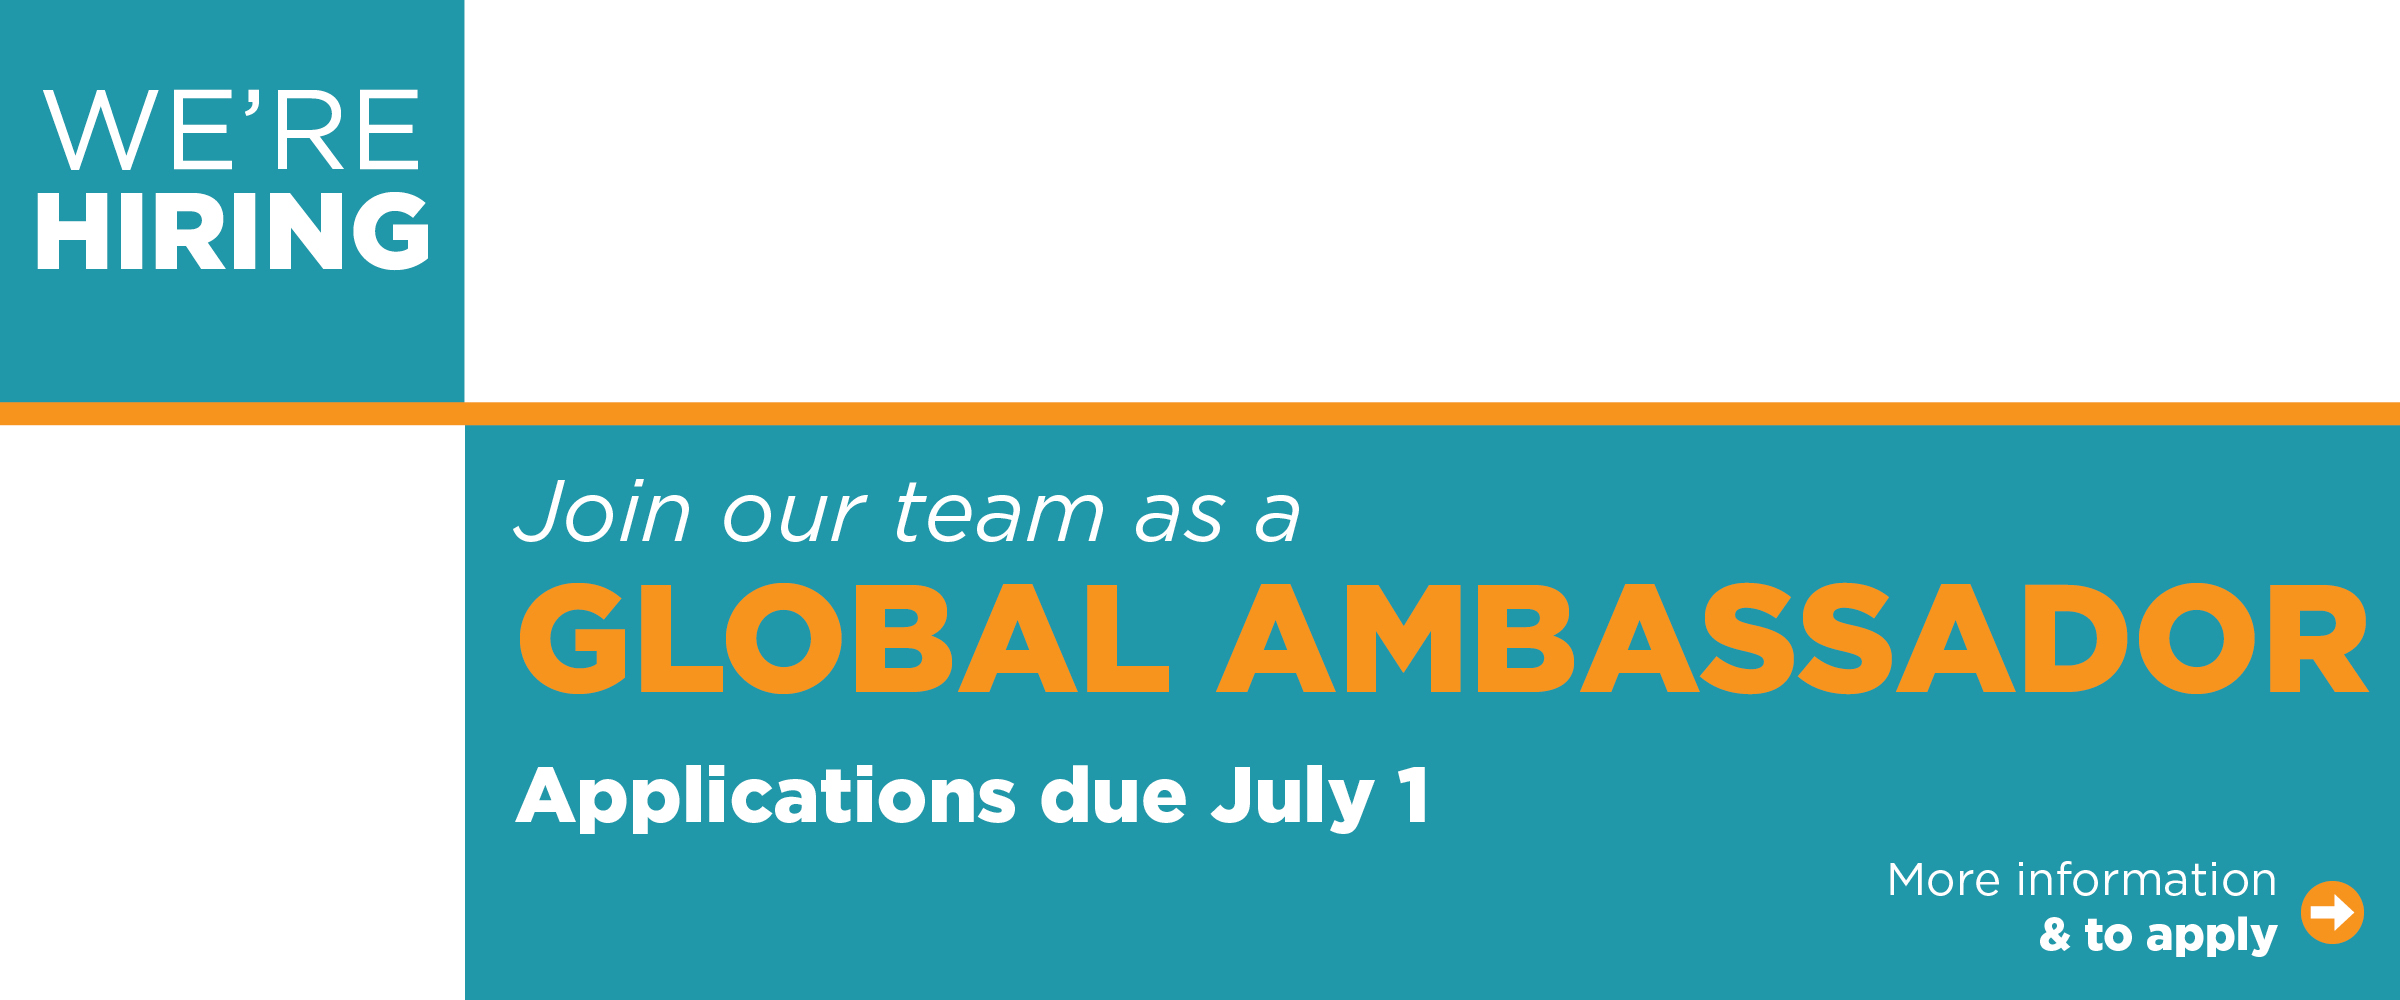 Website Banner_We’re Hiring Global Ambassadors